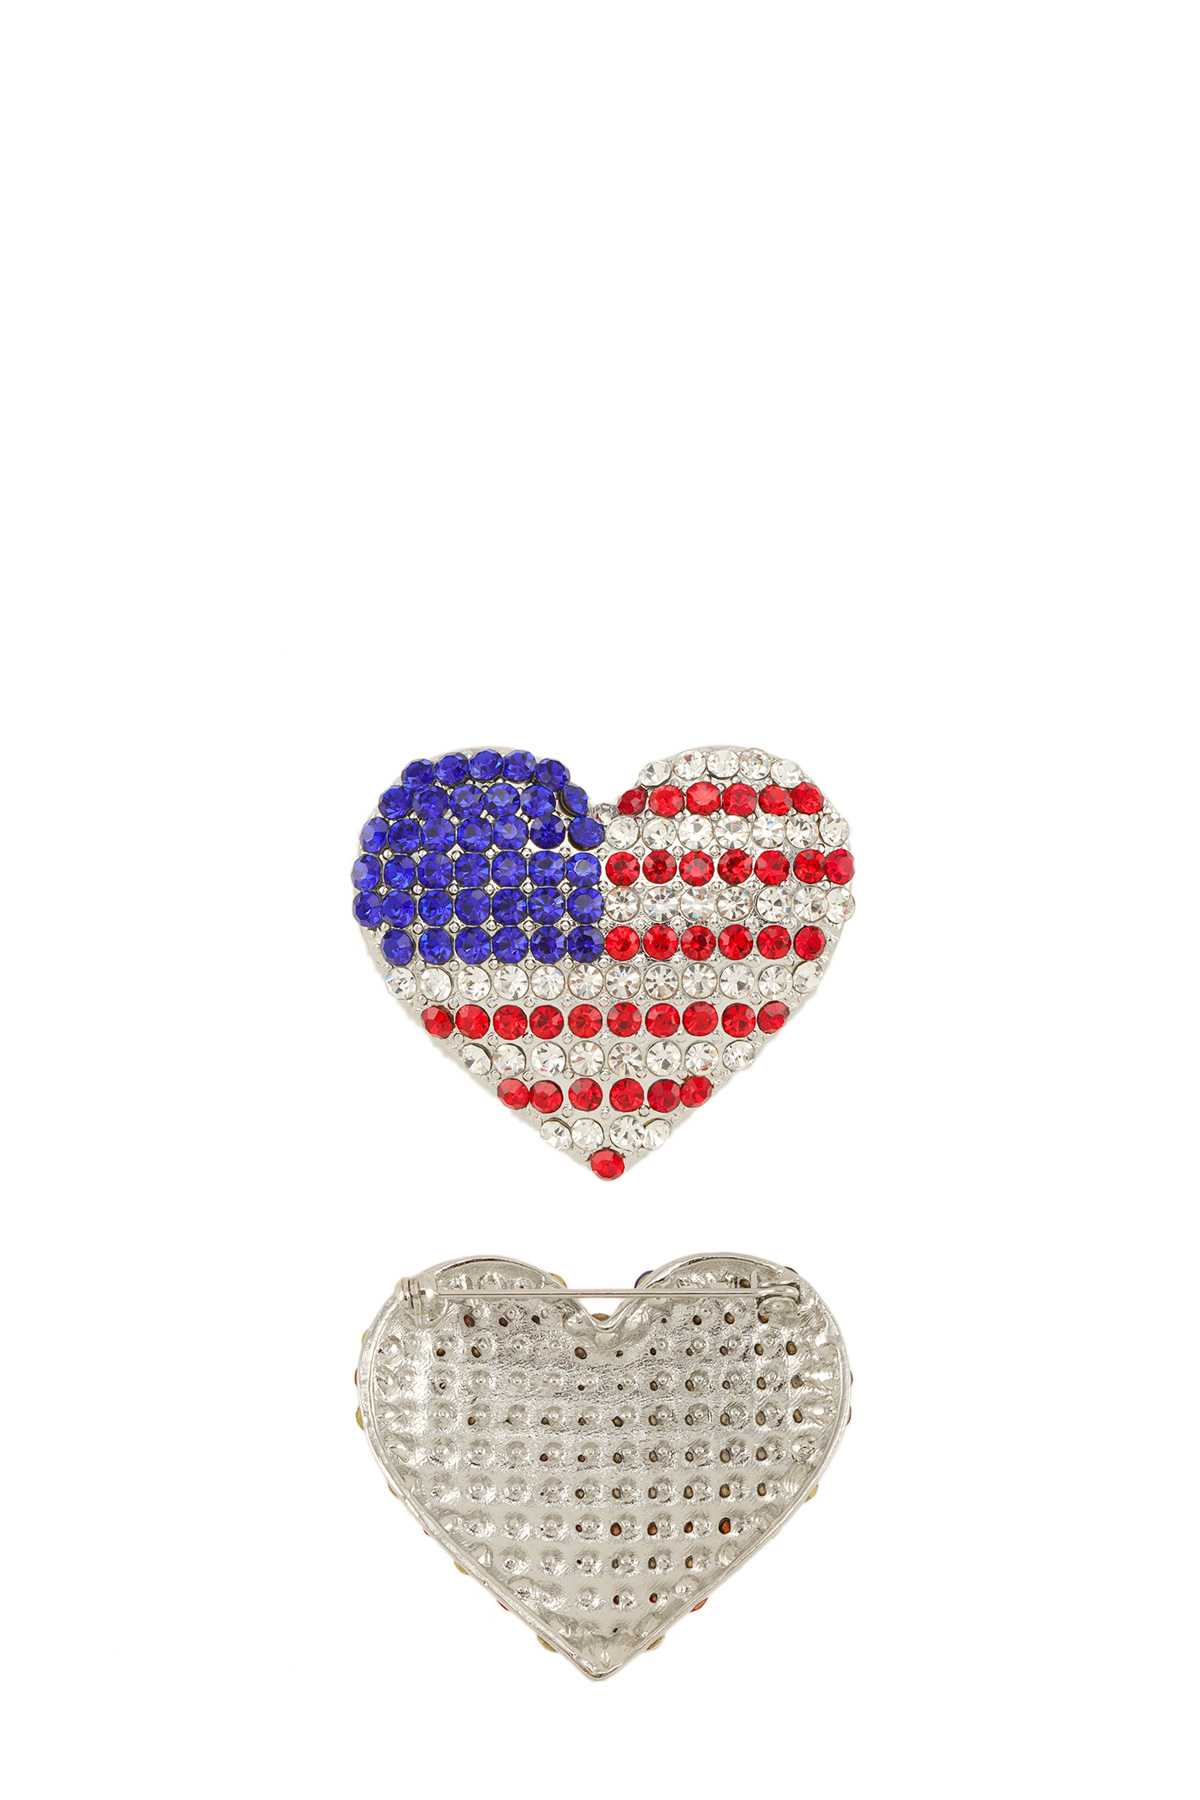 Rhinestone American Flag Heart Shape Brooch